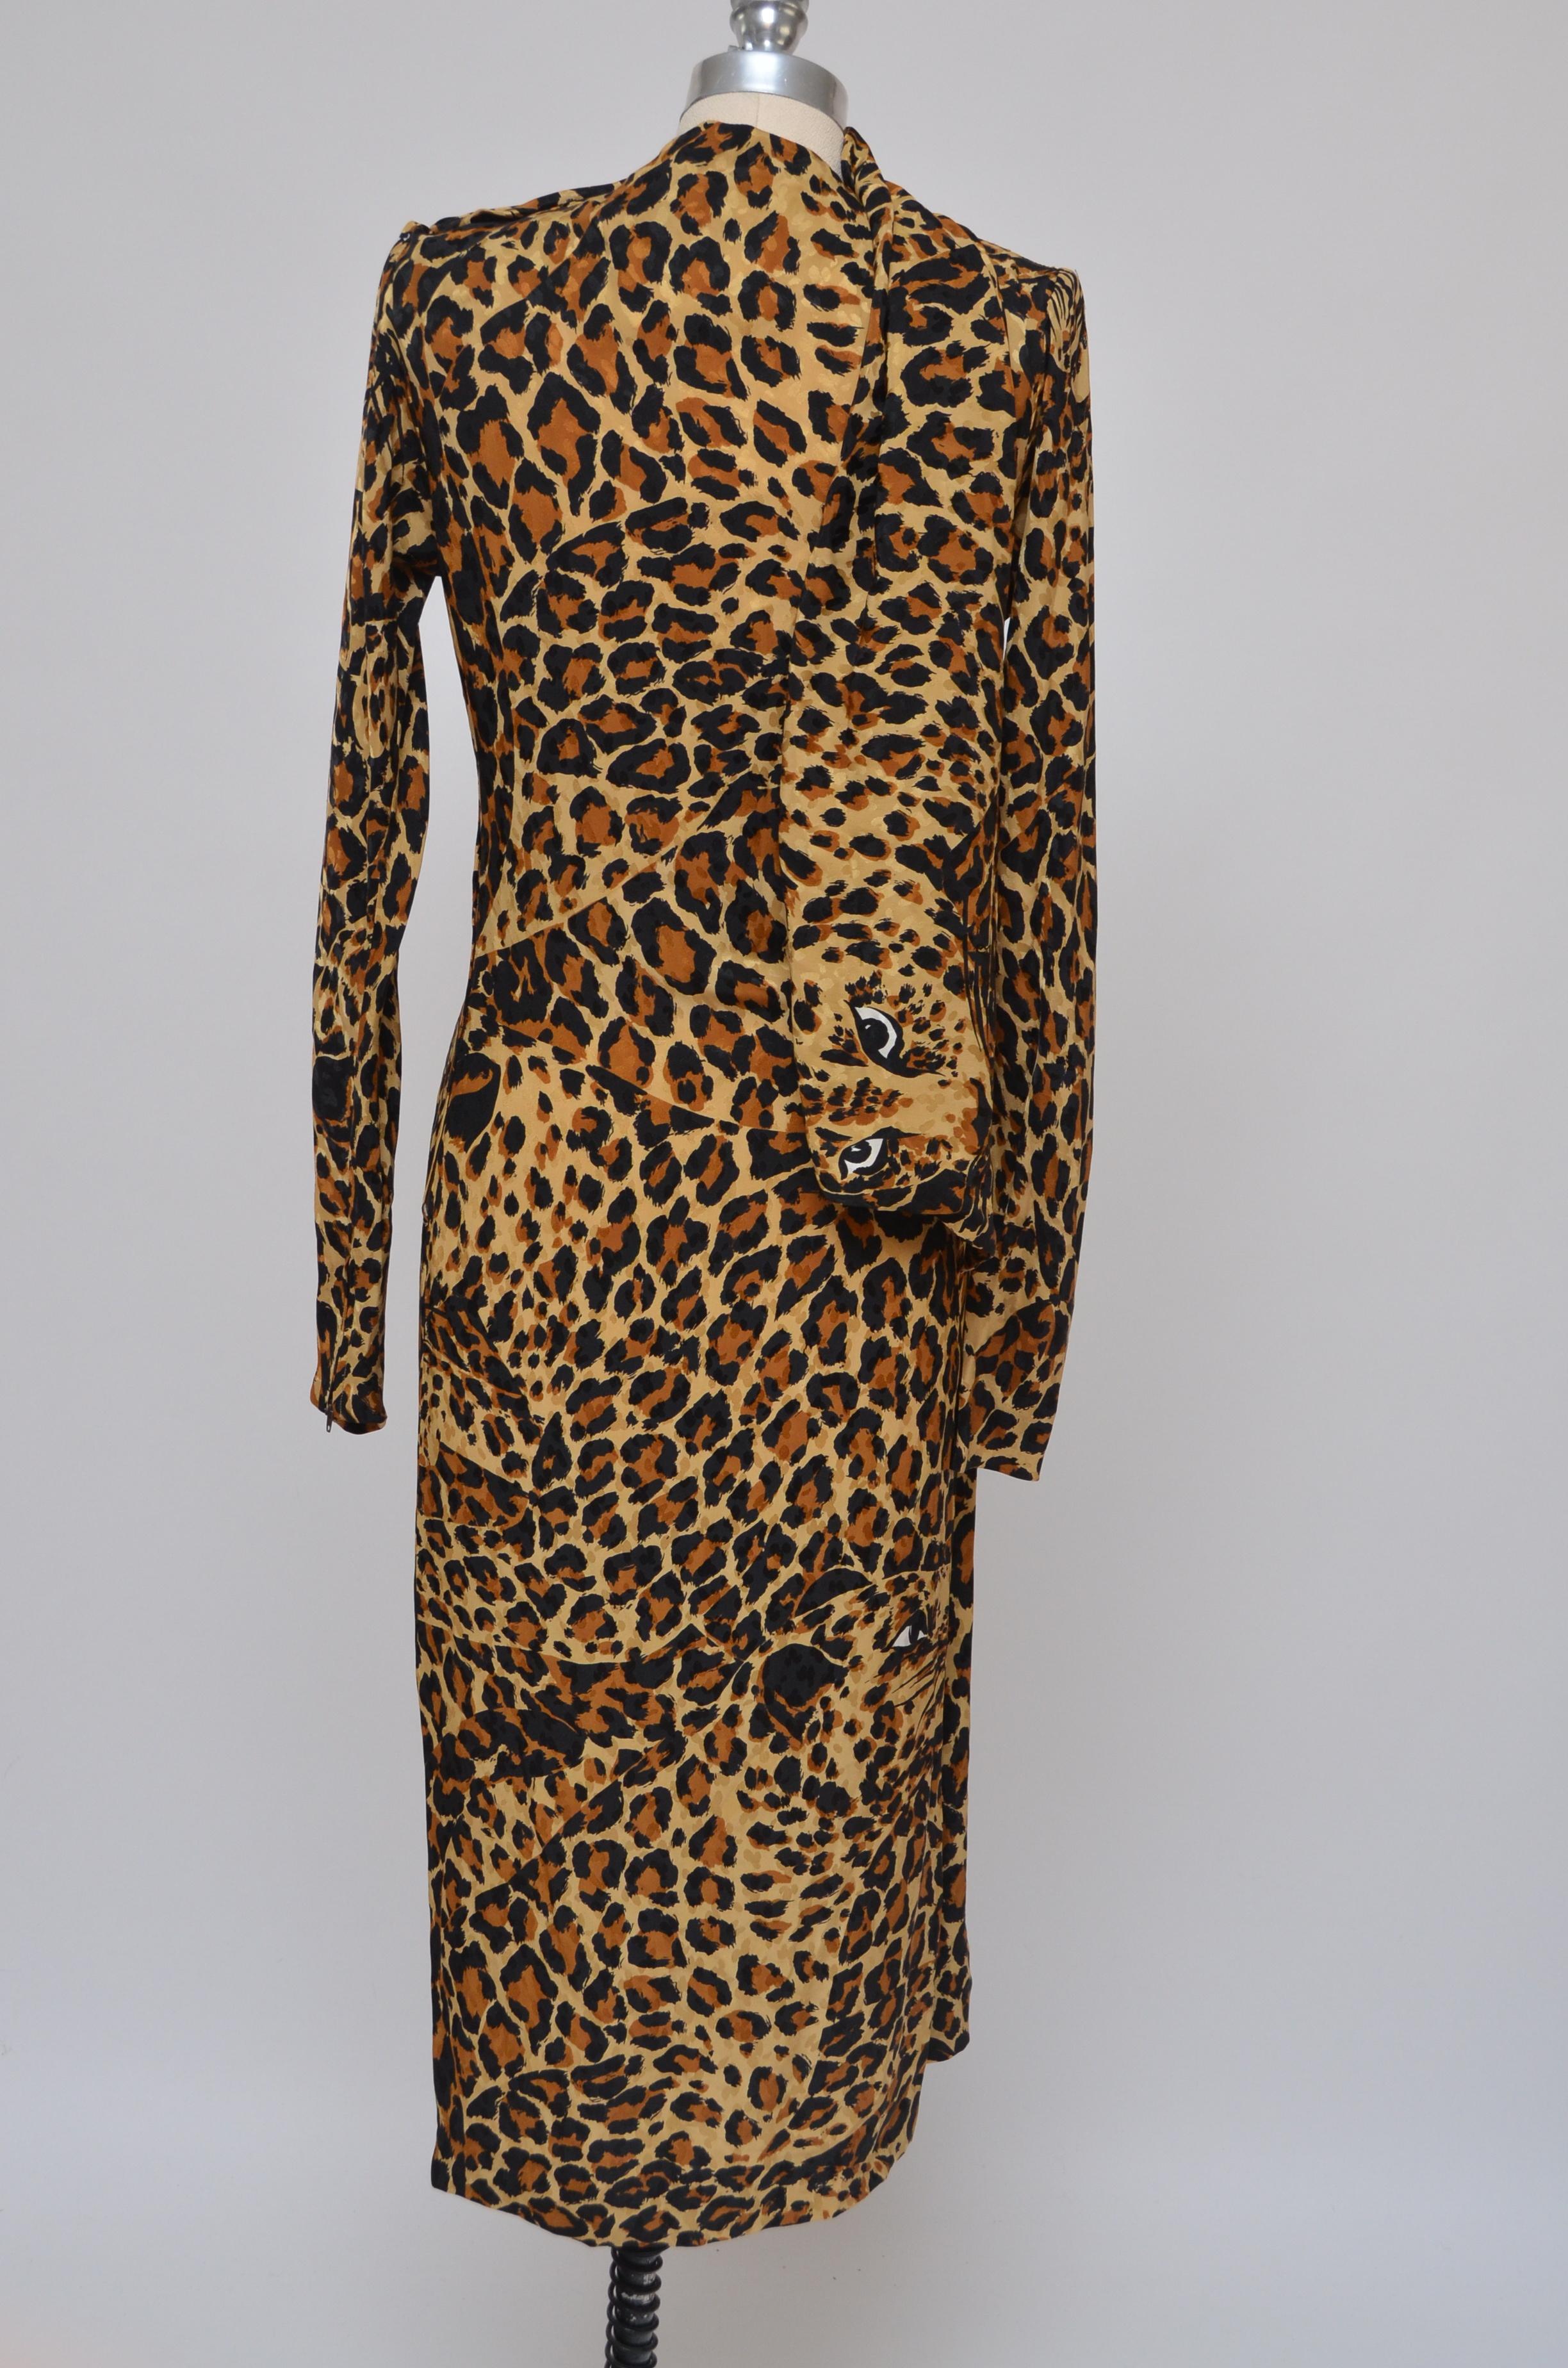 Women's Yves Saint Laurent Rive Gauche Cheetah Silk Dress, 1980s NEW With Tags